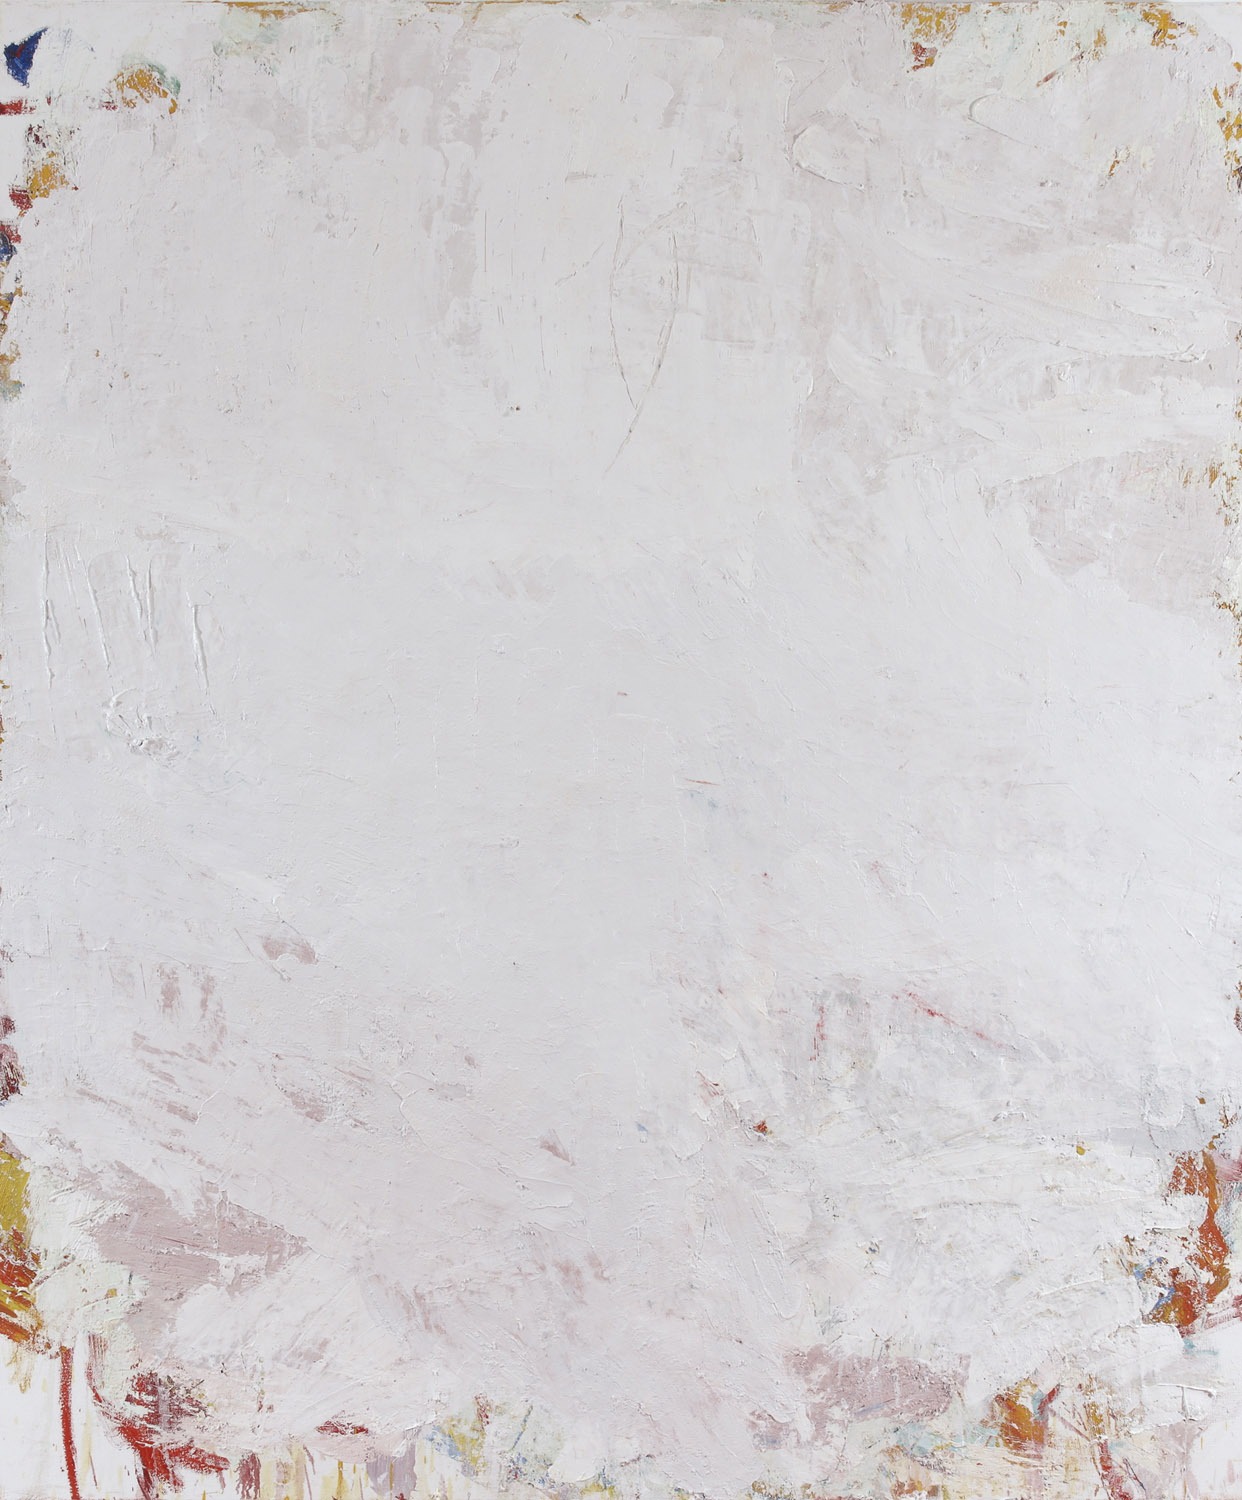 Aida Tomescu, 'Tethys', 2010, mixed media on linen, 184 x 154 cm